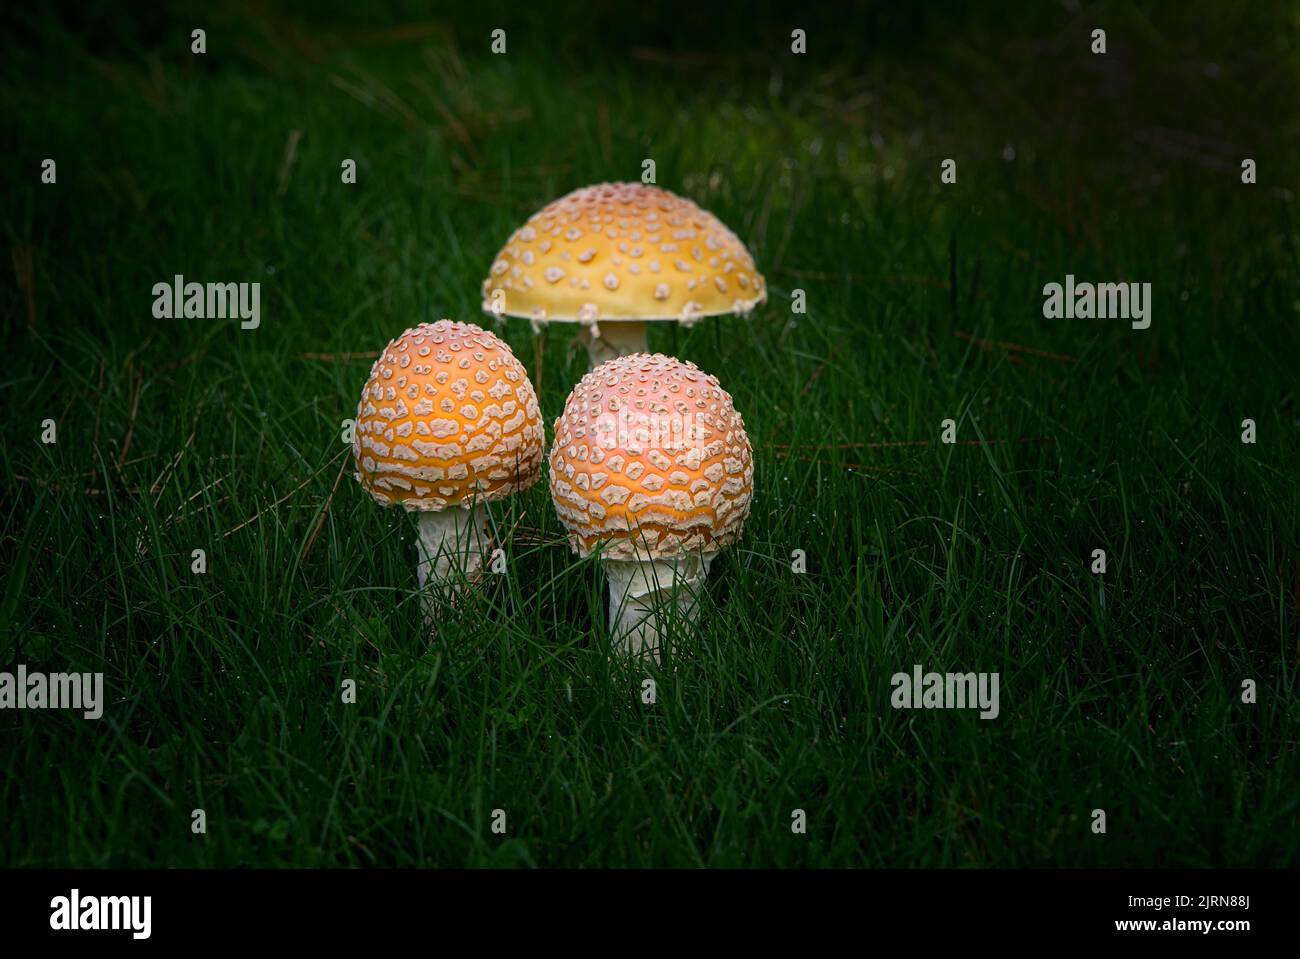 Three mushrooms growing wild in the grass in rural North Carolina Stock Photo